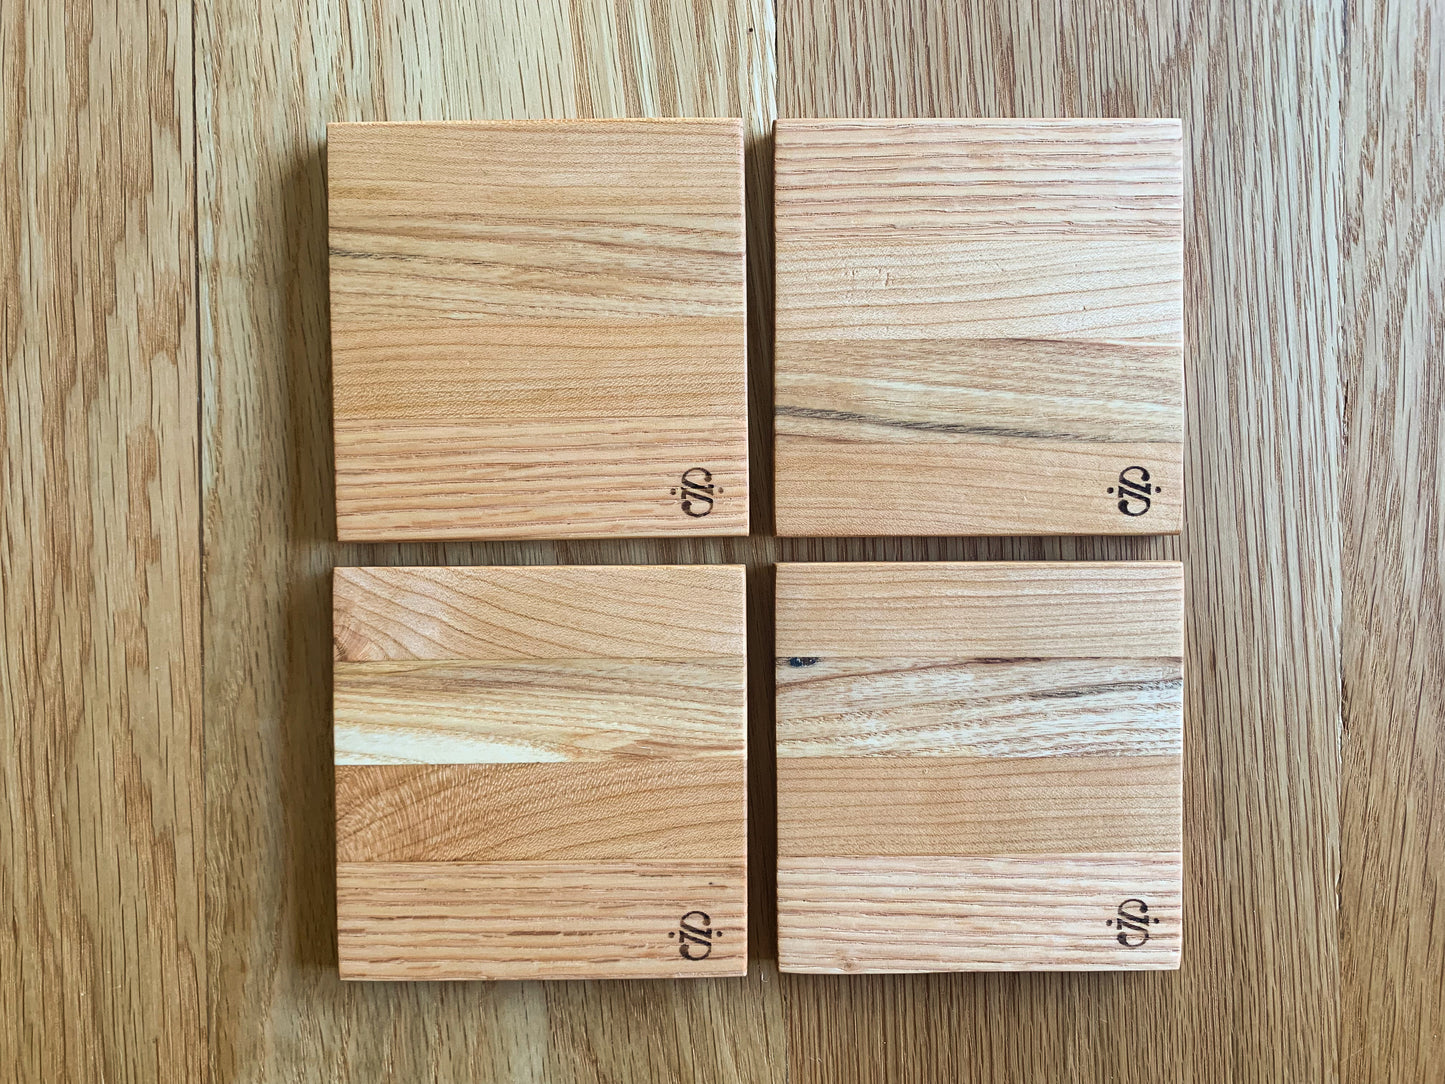 Set of 4 Natural Hardwood Coasters